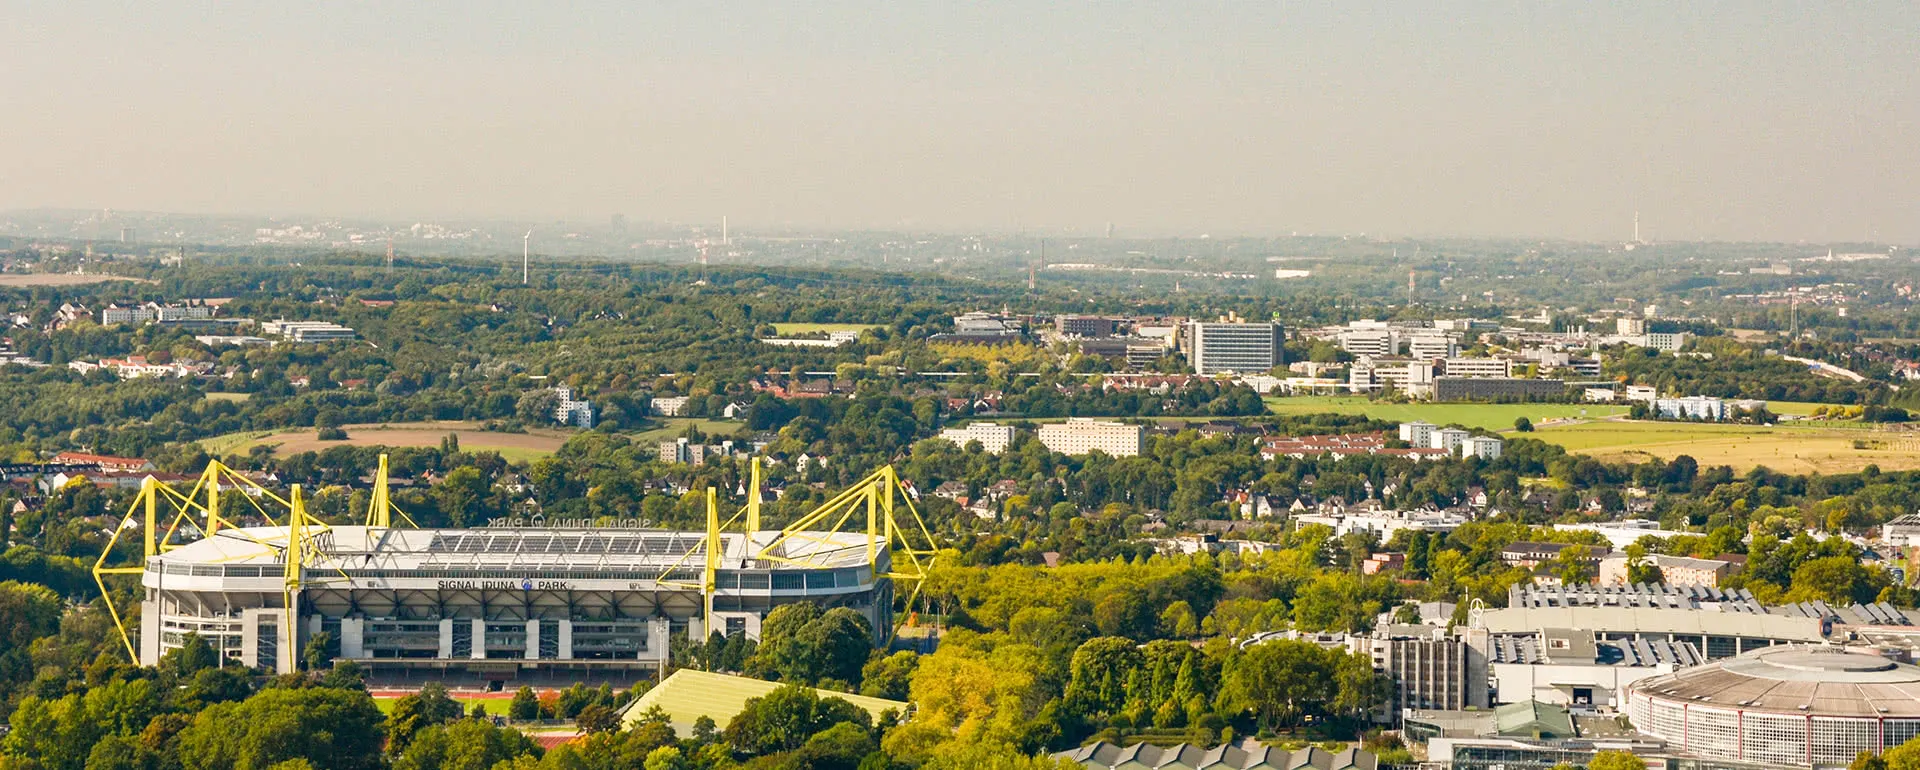 Dortmund - the destination for bus trips